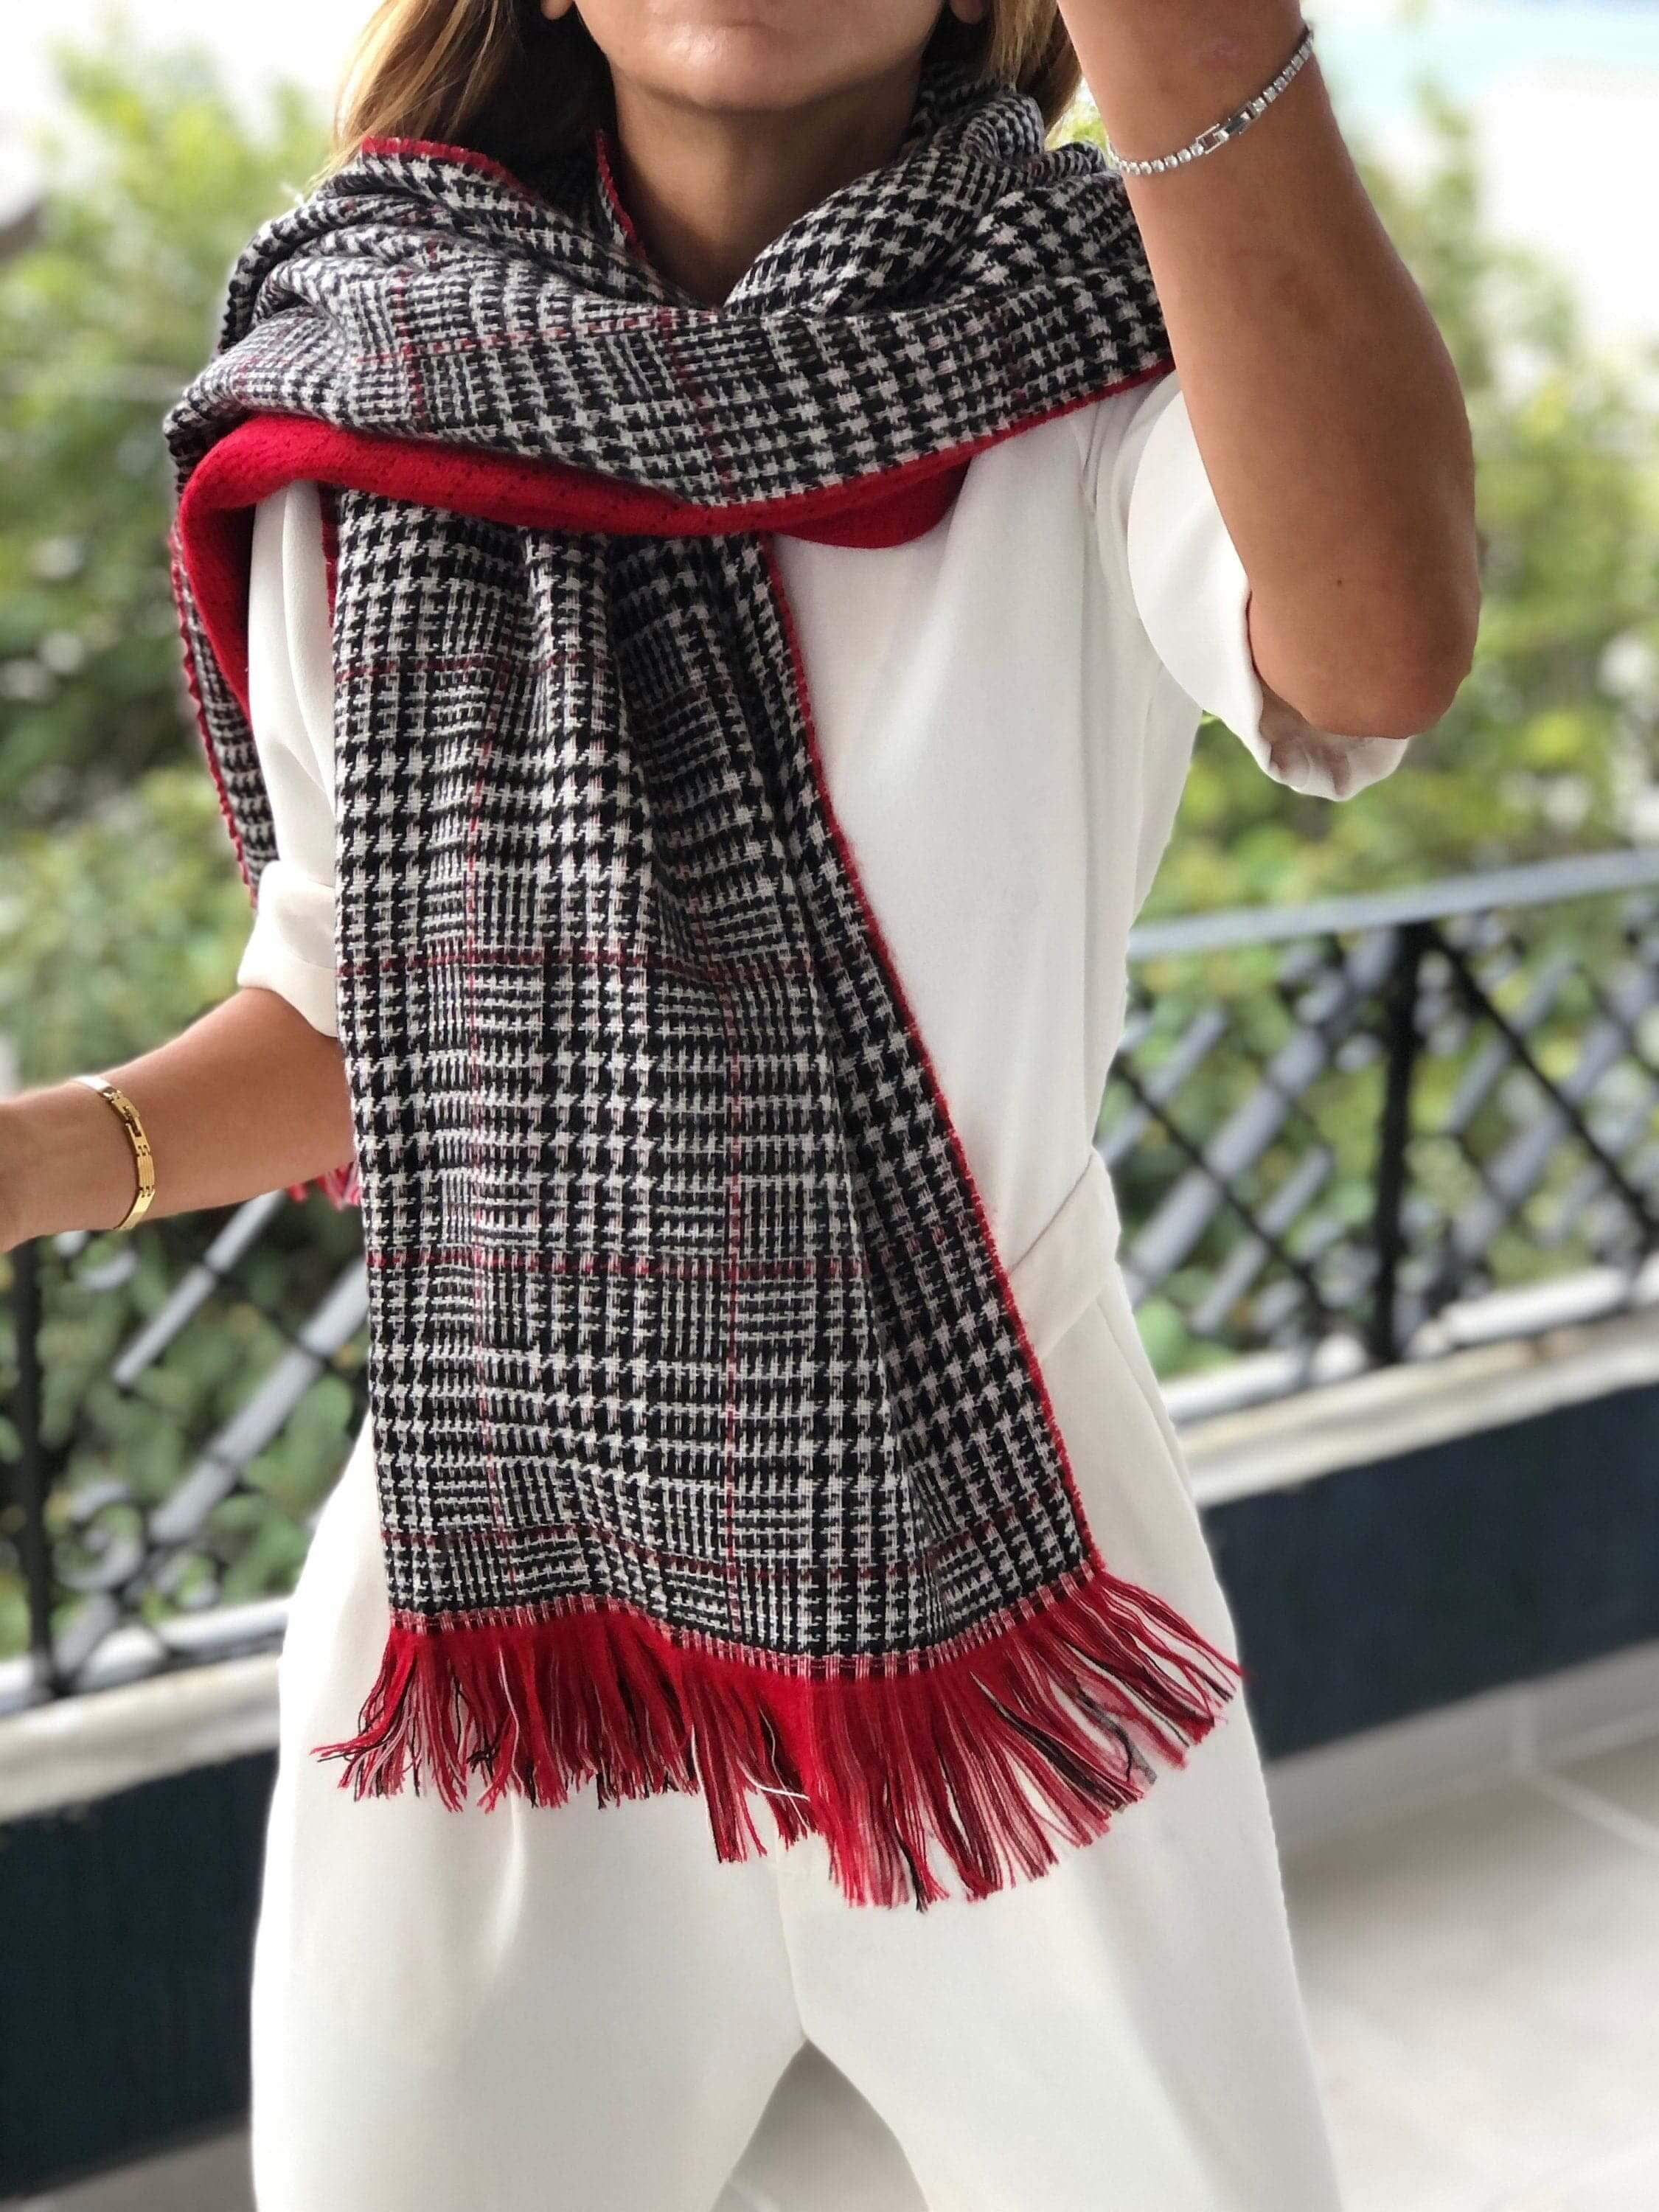 Long Wool Blend Reversible Knitwear Shawl, Reversible Wool, Pattern Shawl, Red White Black Color Reversible Shawl for Gift, Travel Scarf